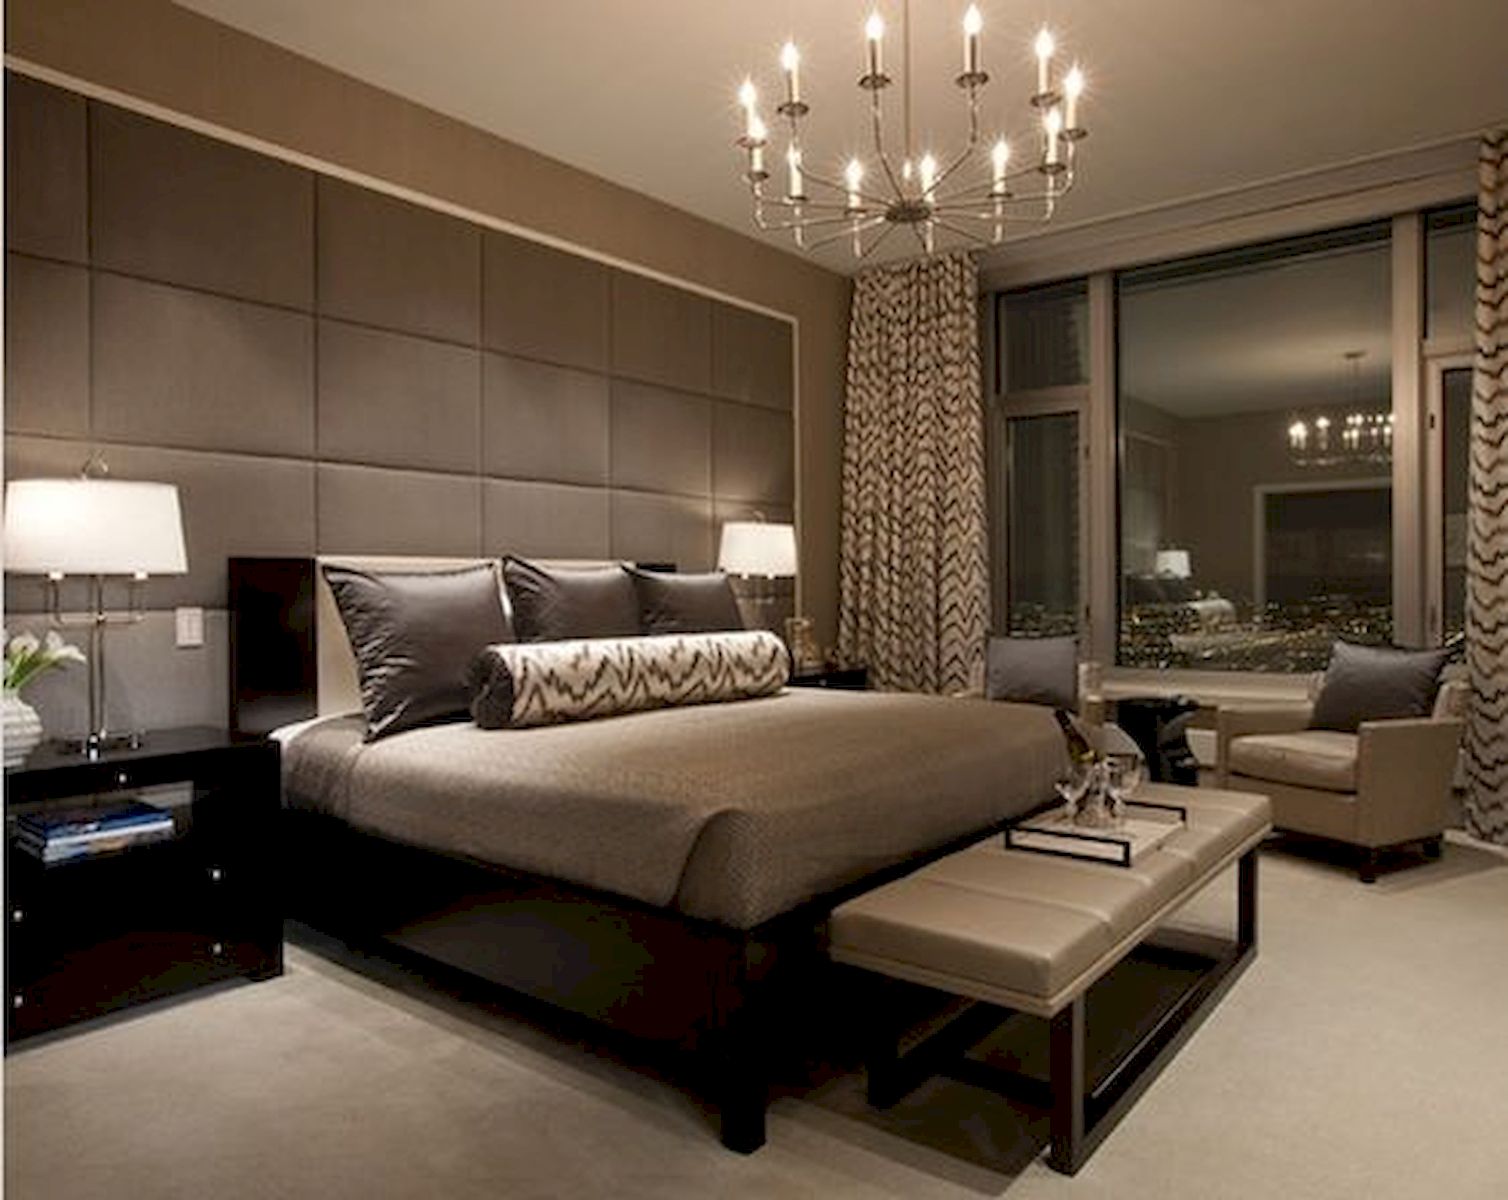 50 Amazing Modern Bedroom Decoration Ideas With Luxury Design (25)